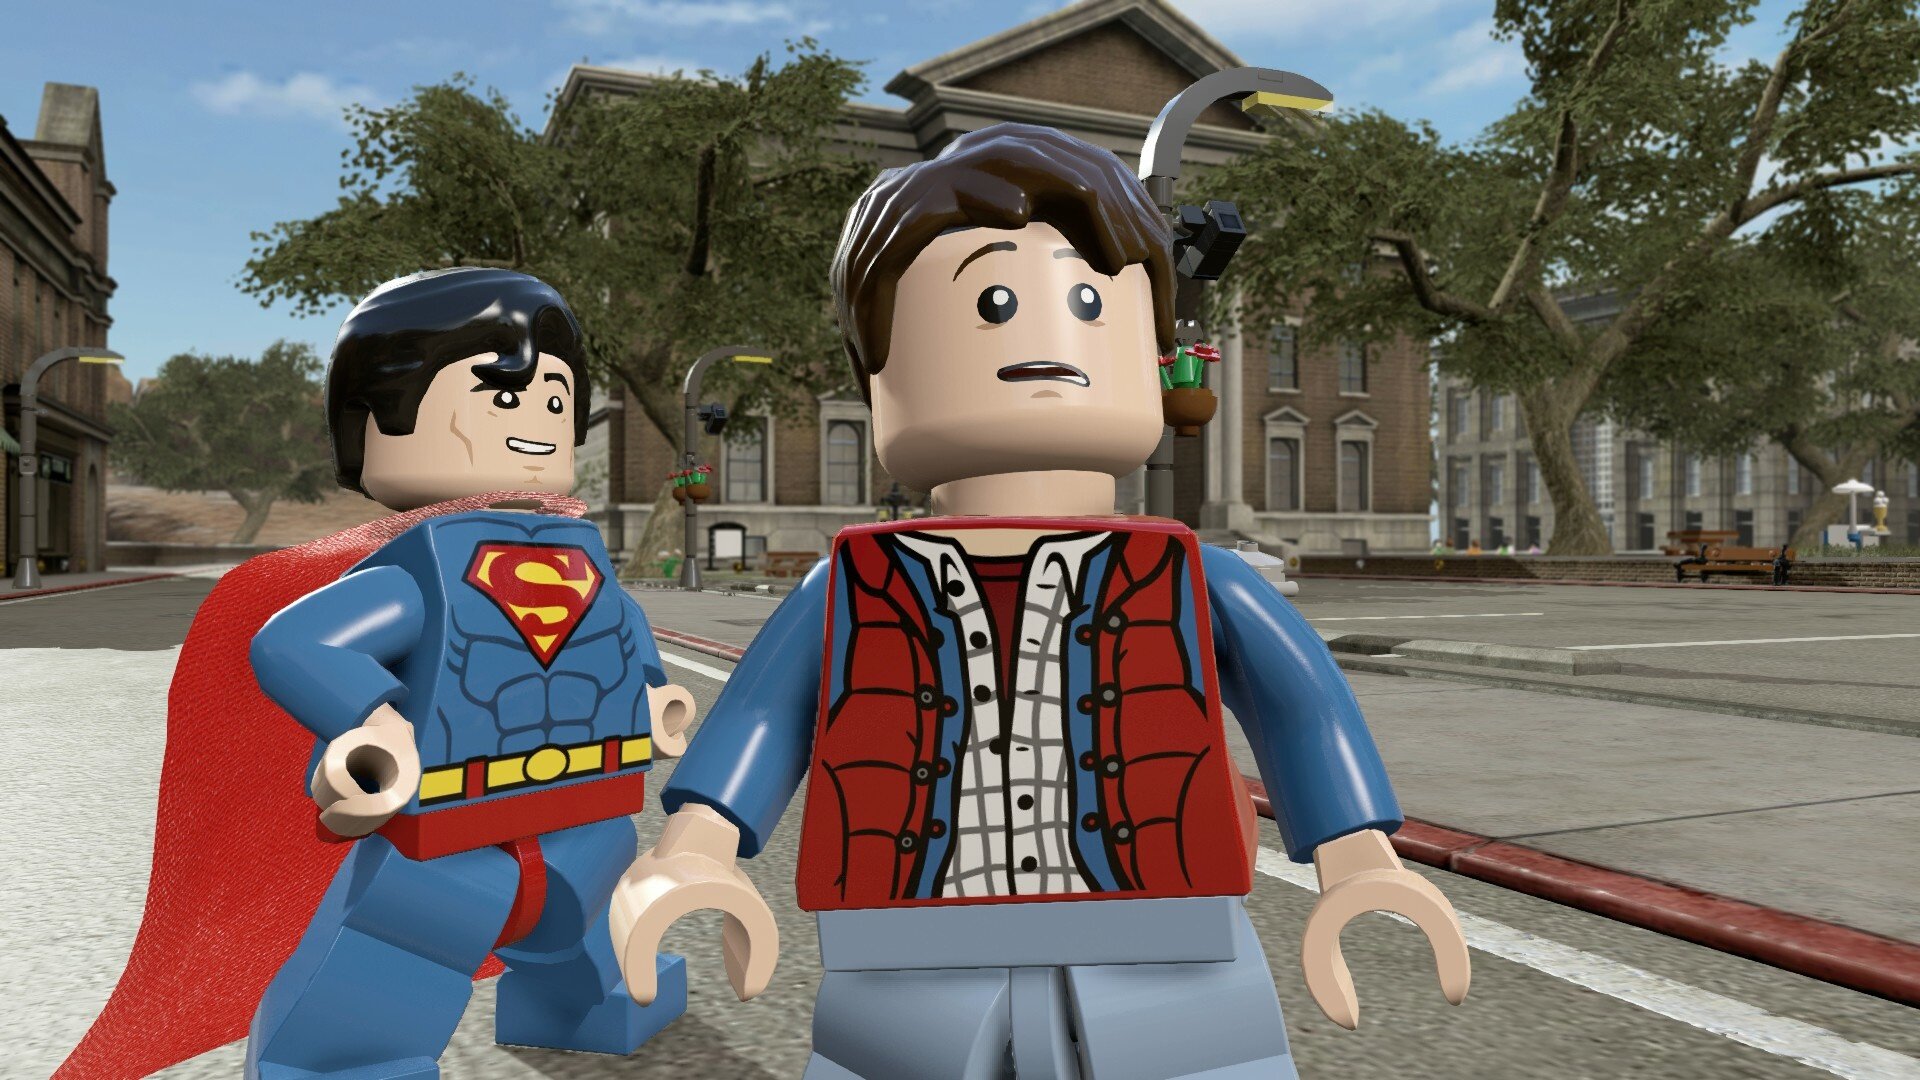 LEGO Batman 2: DC Super Heroes - Xbox 360 (Renewed)